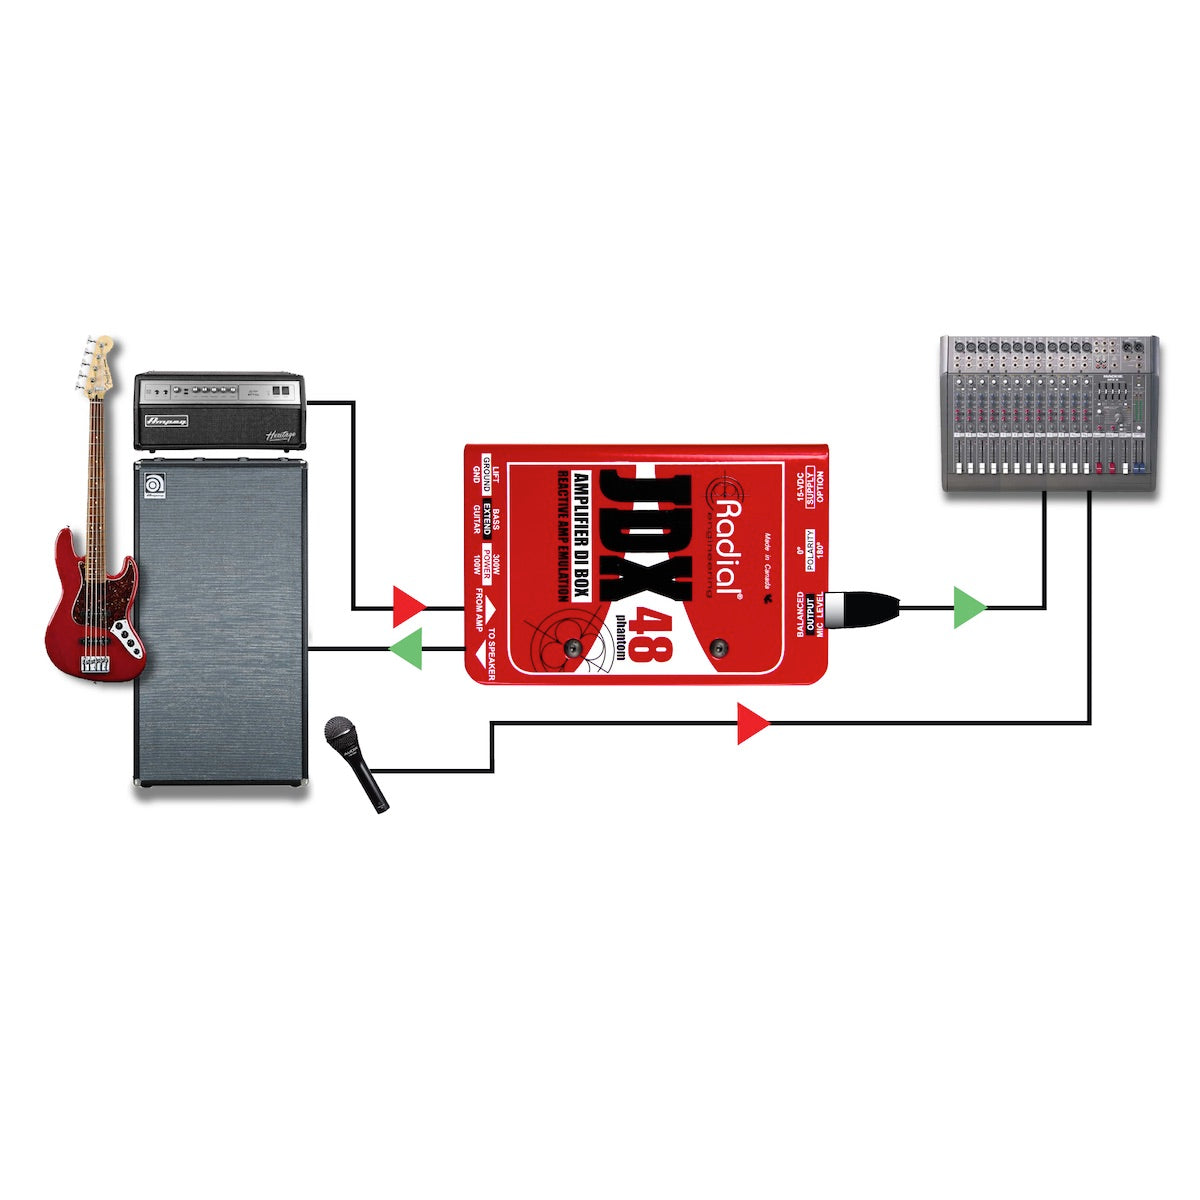 Radial JDX 48 - Reactor Guitar Amp Direct Box, application diagram